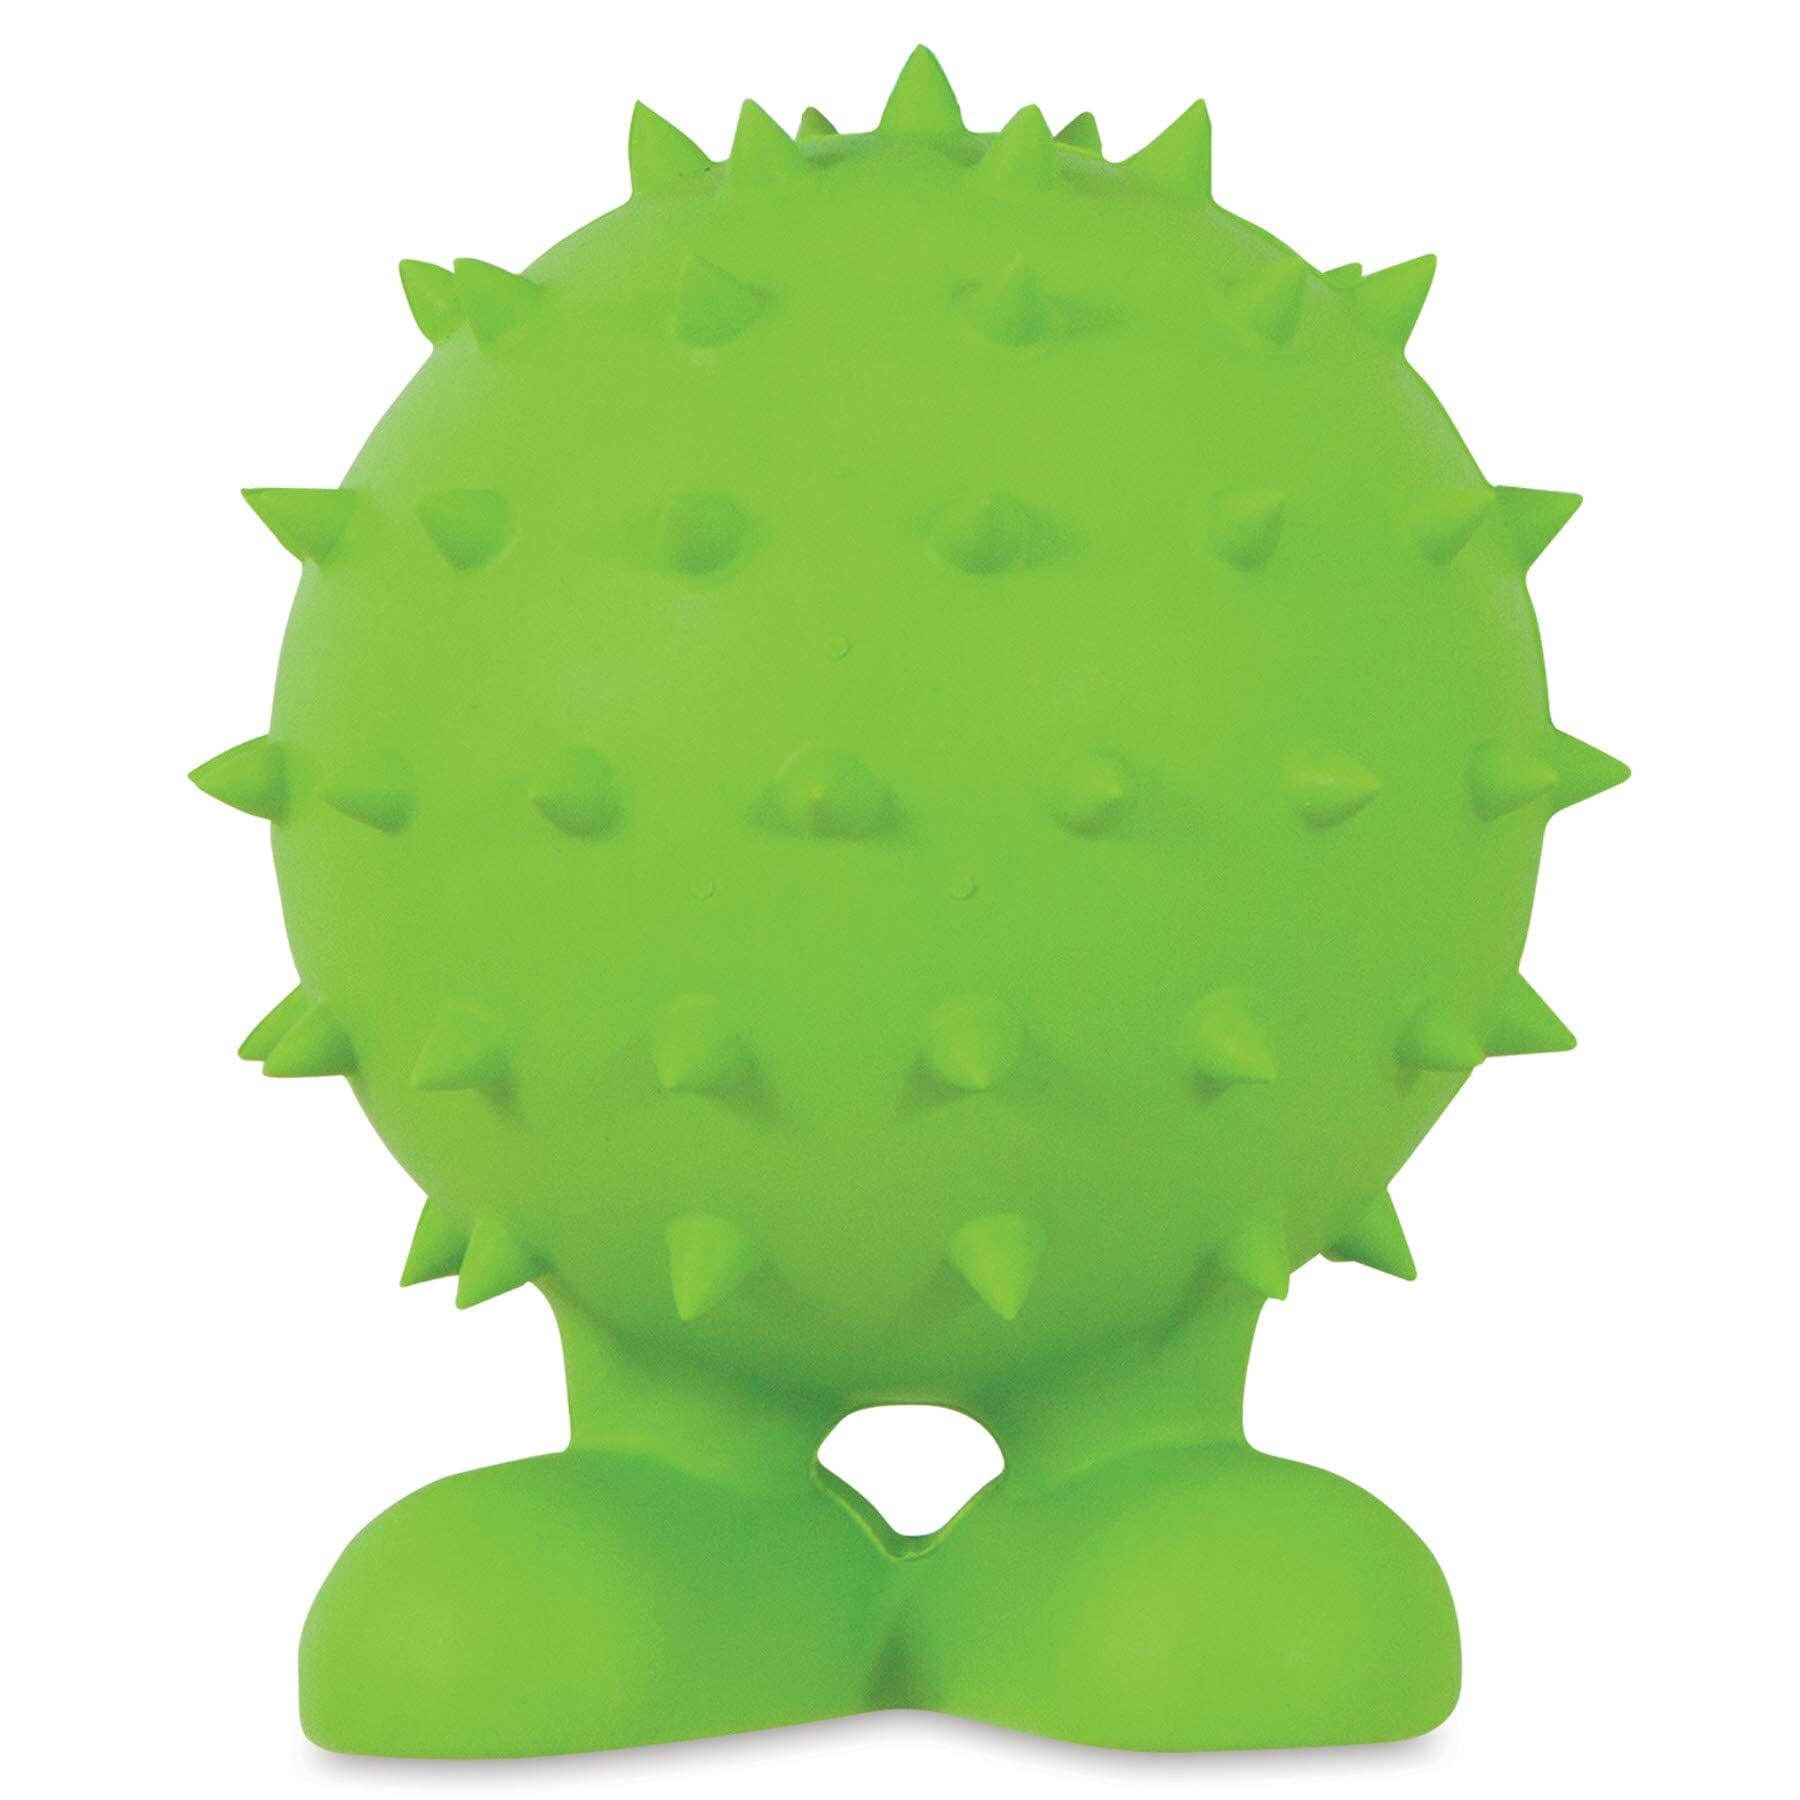 JW Pet  Spiky Cuz Rubberized Dog Toy - Assorted - Large  